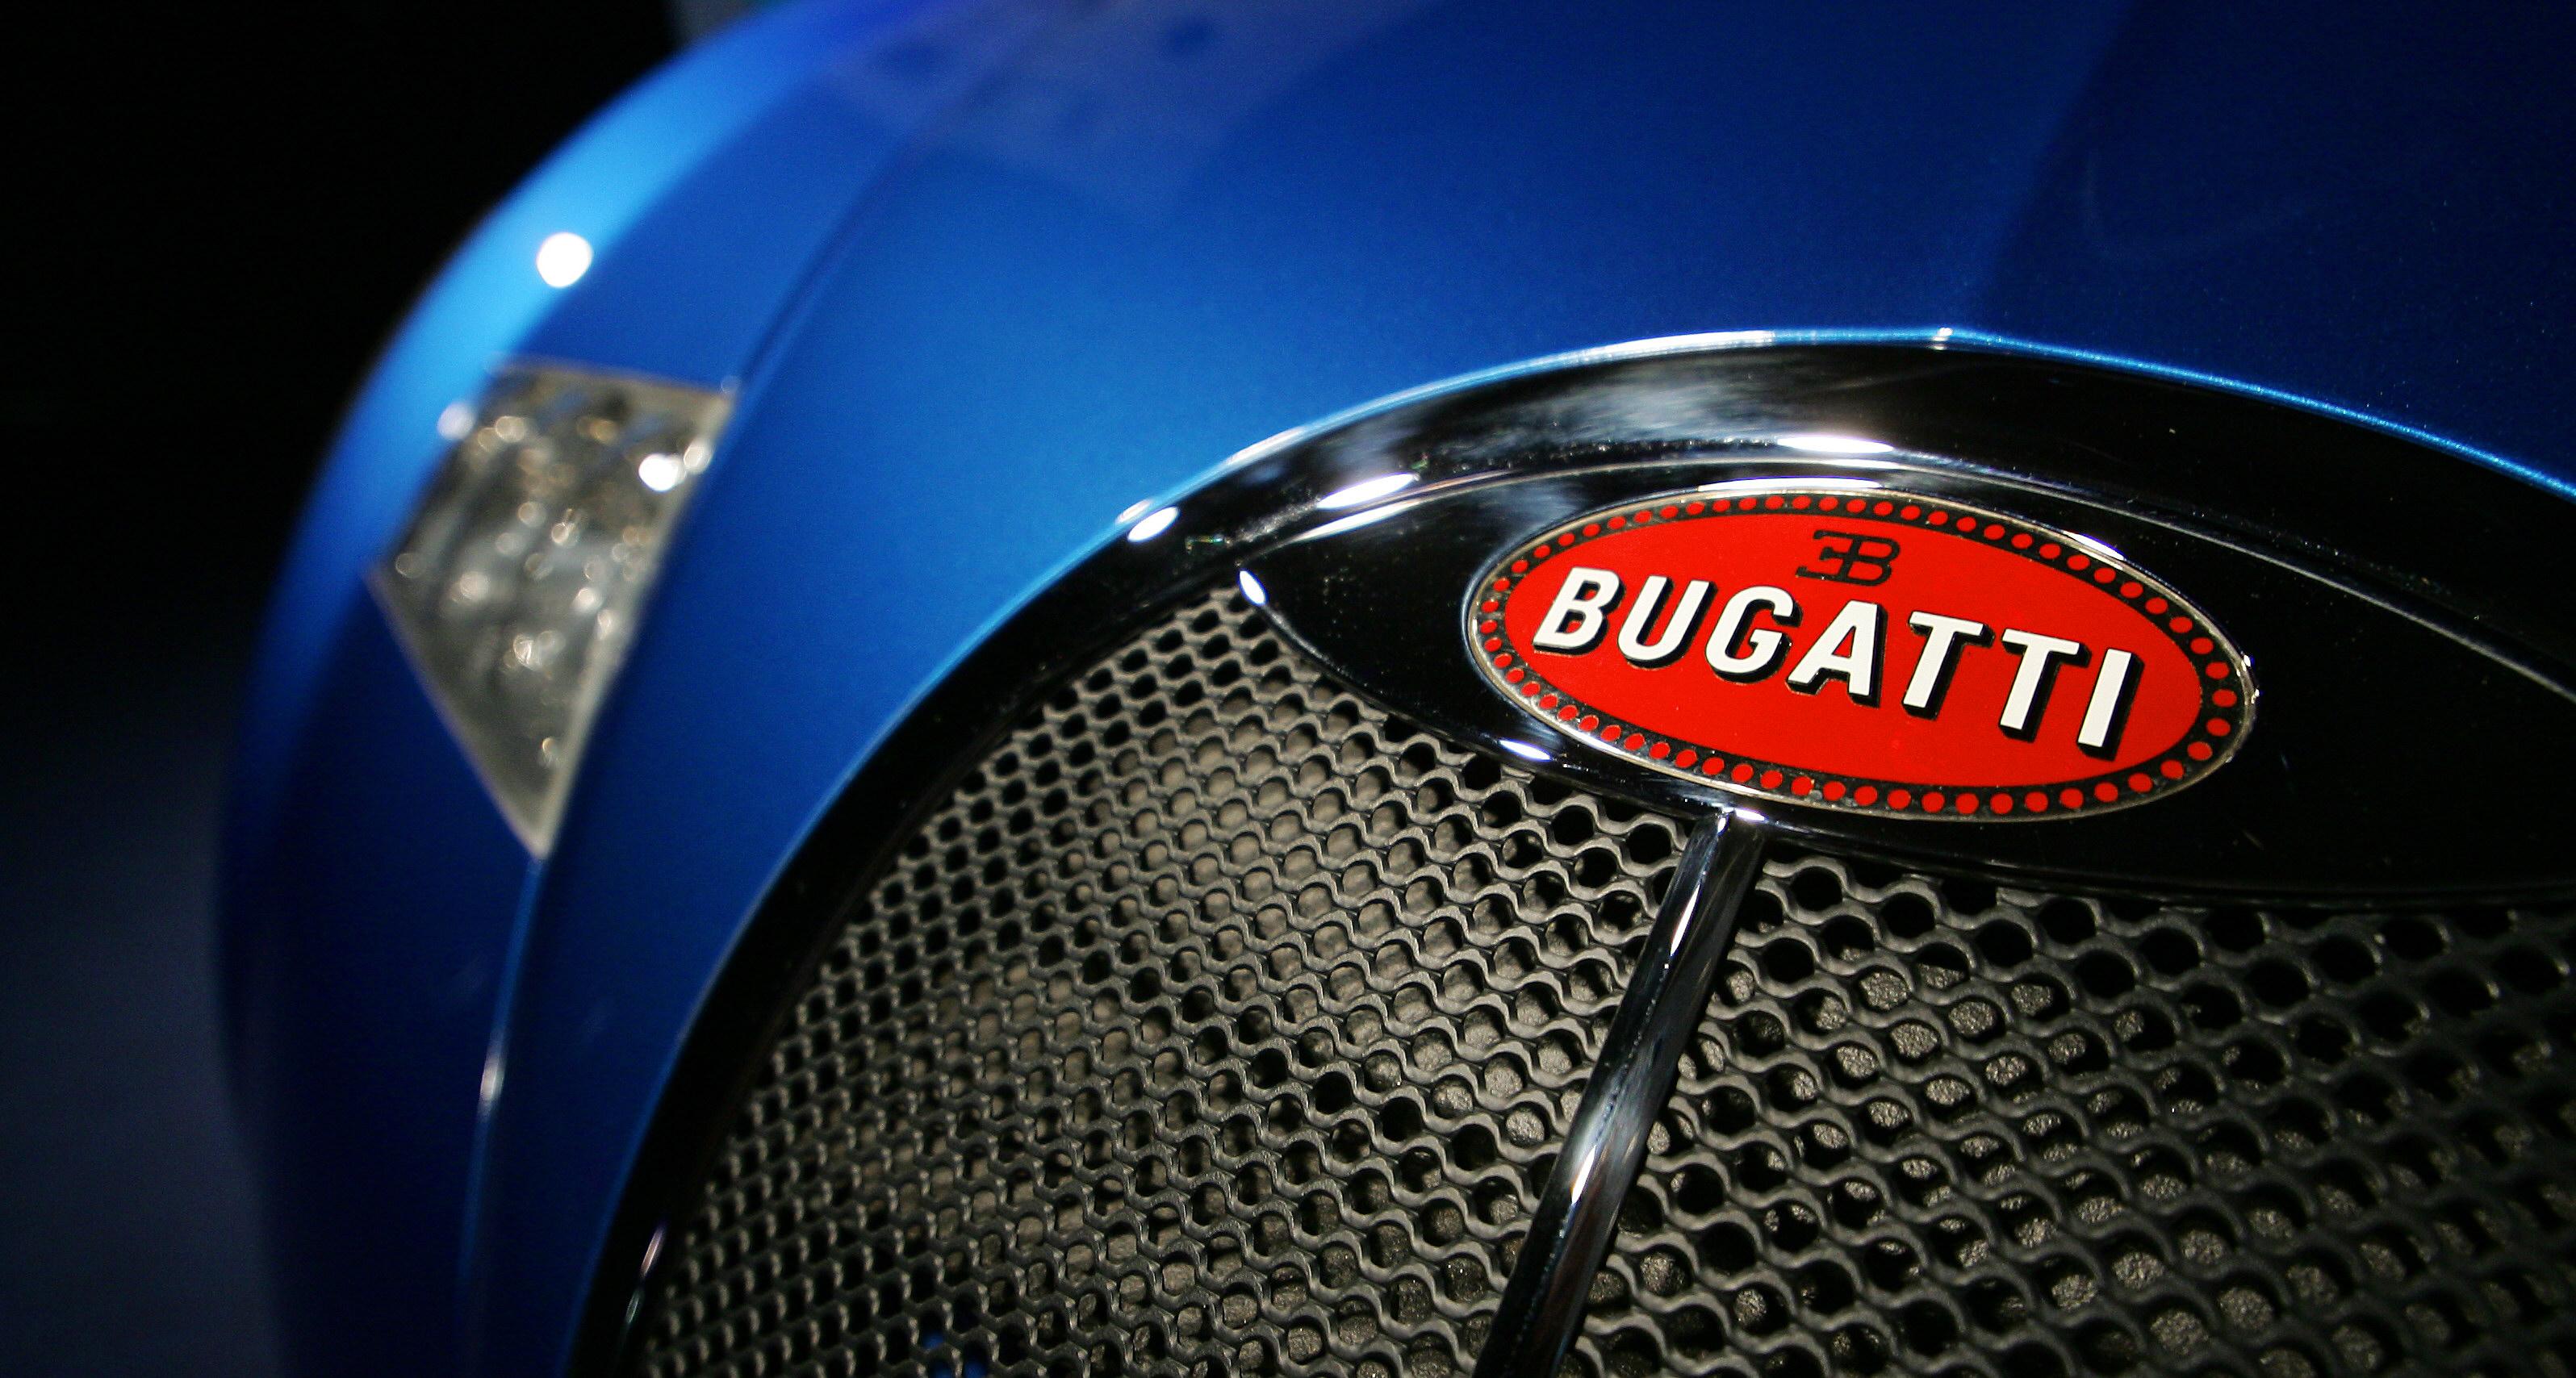 Close up of the Bugatti logo.